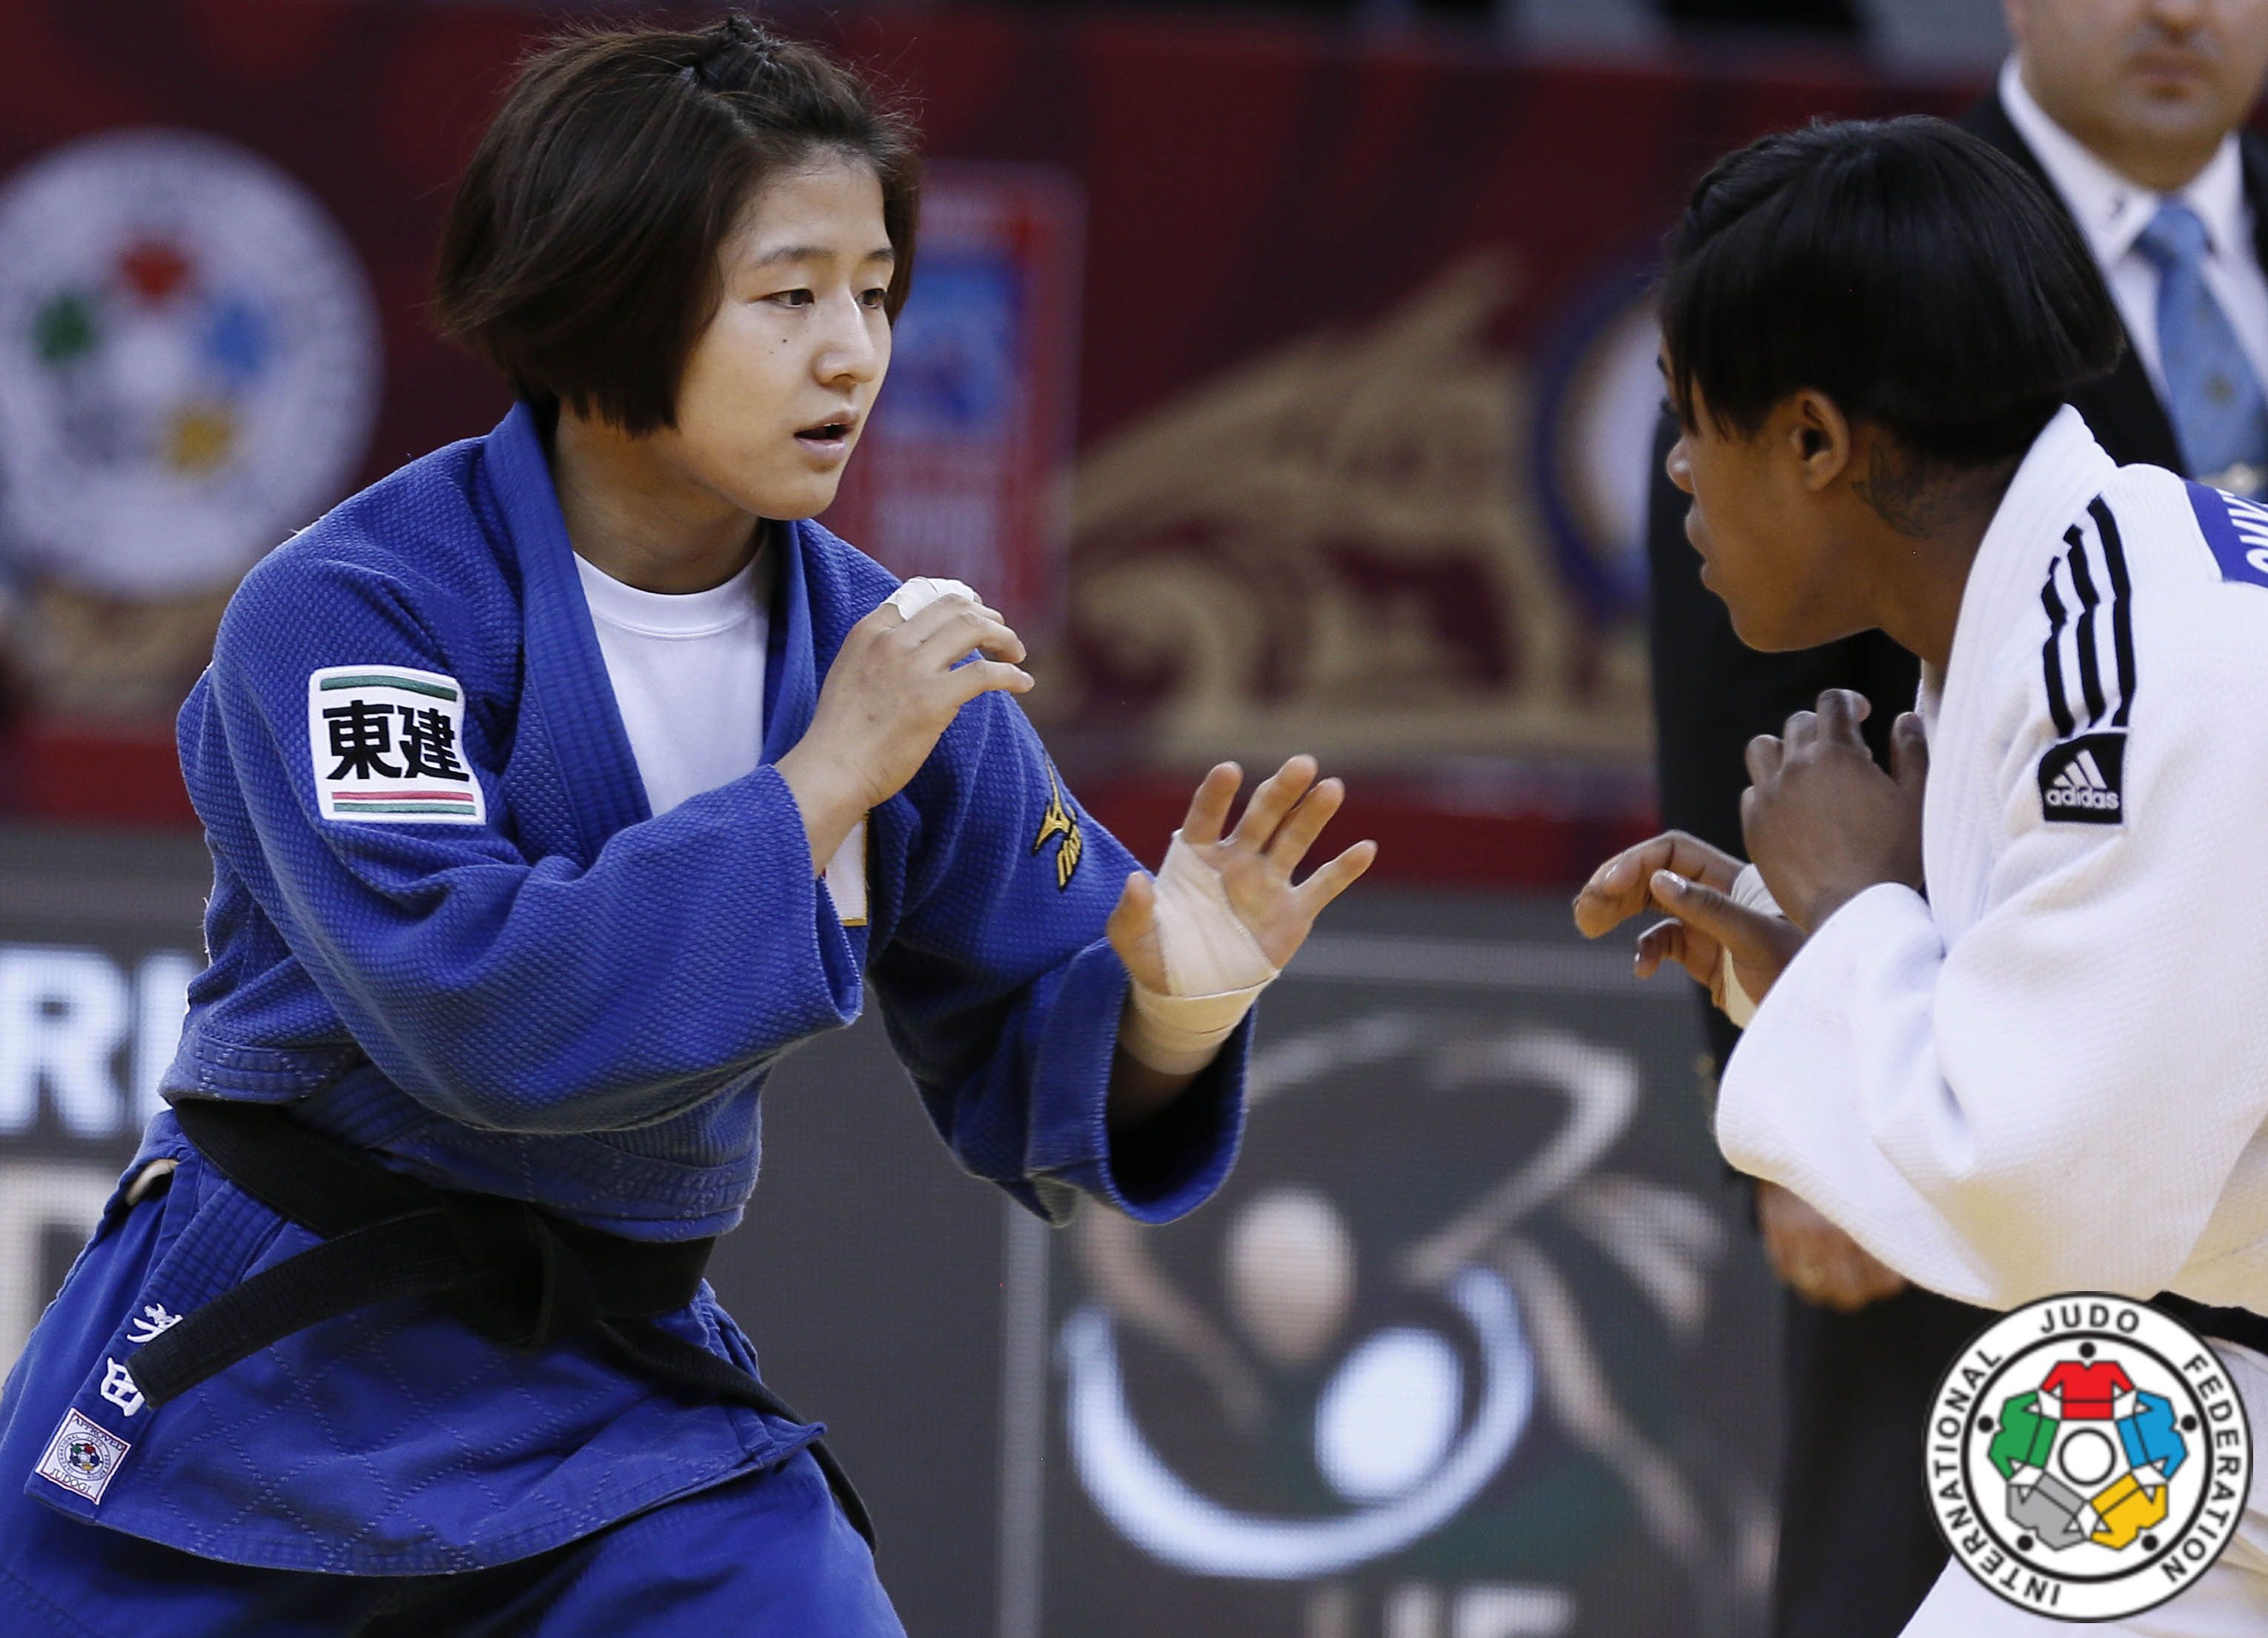 Tsukasa Yoshida, Judoka, JudoInside. Judoka, Martial arts girl, Judo